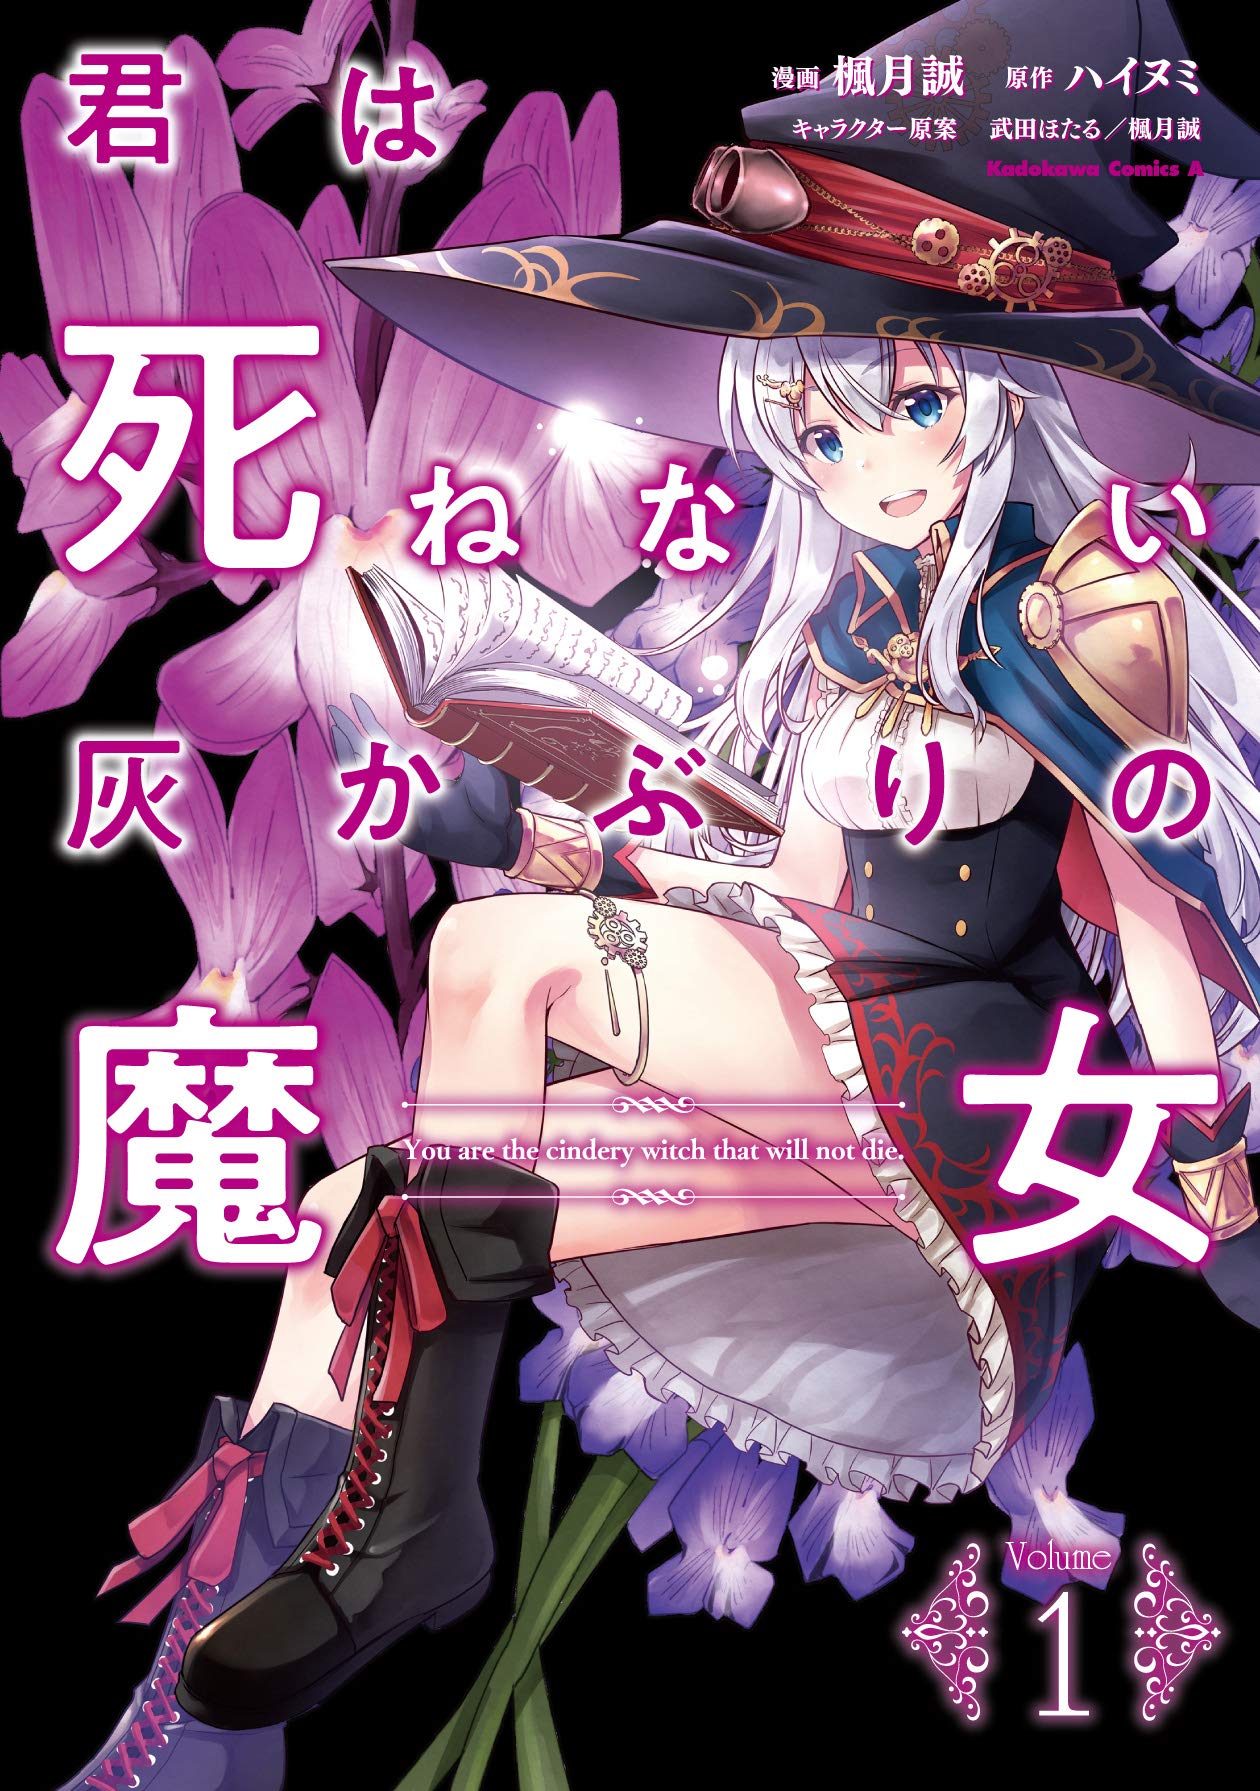 Manga Volume 2, Kimi no Na wa. Wiki